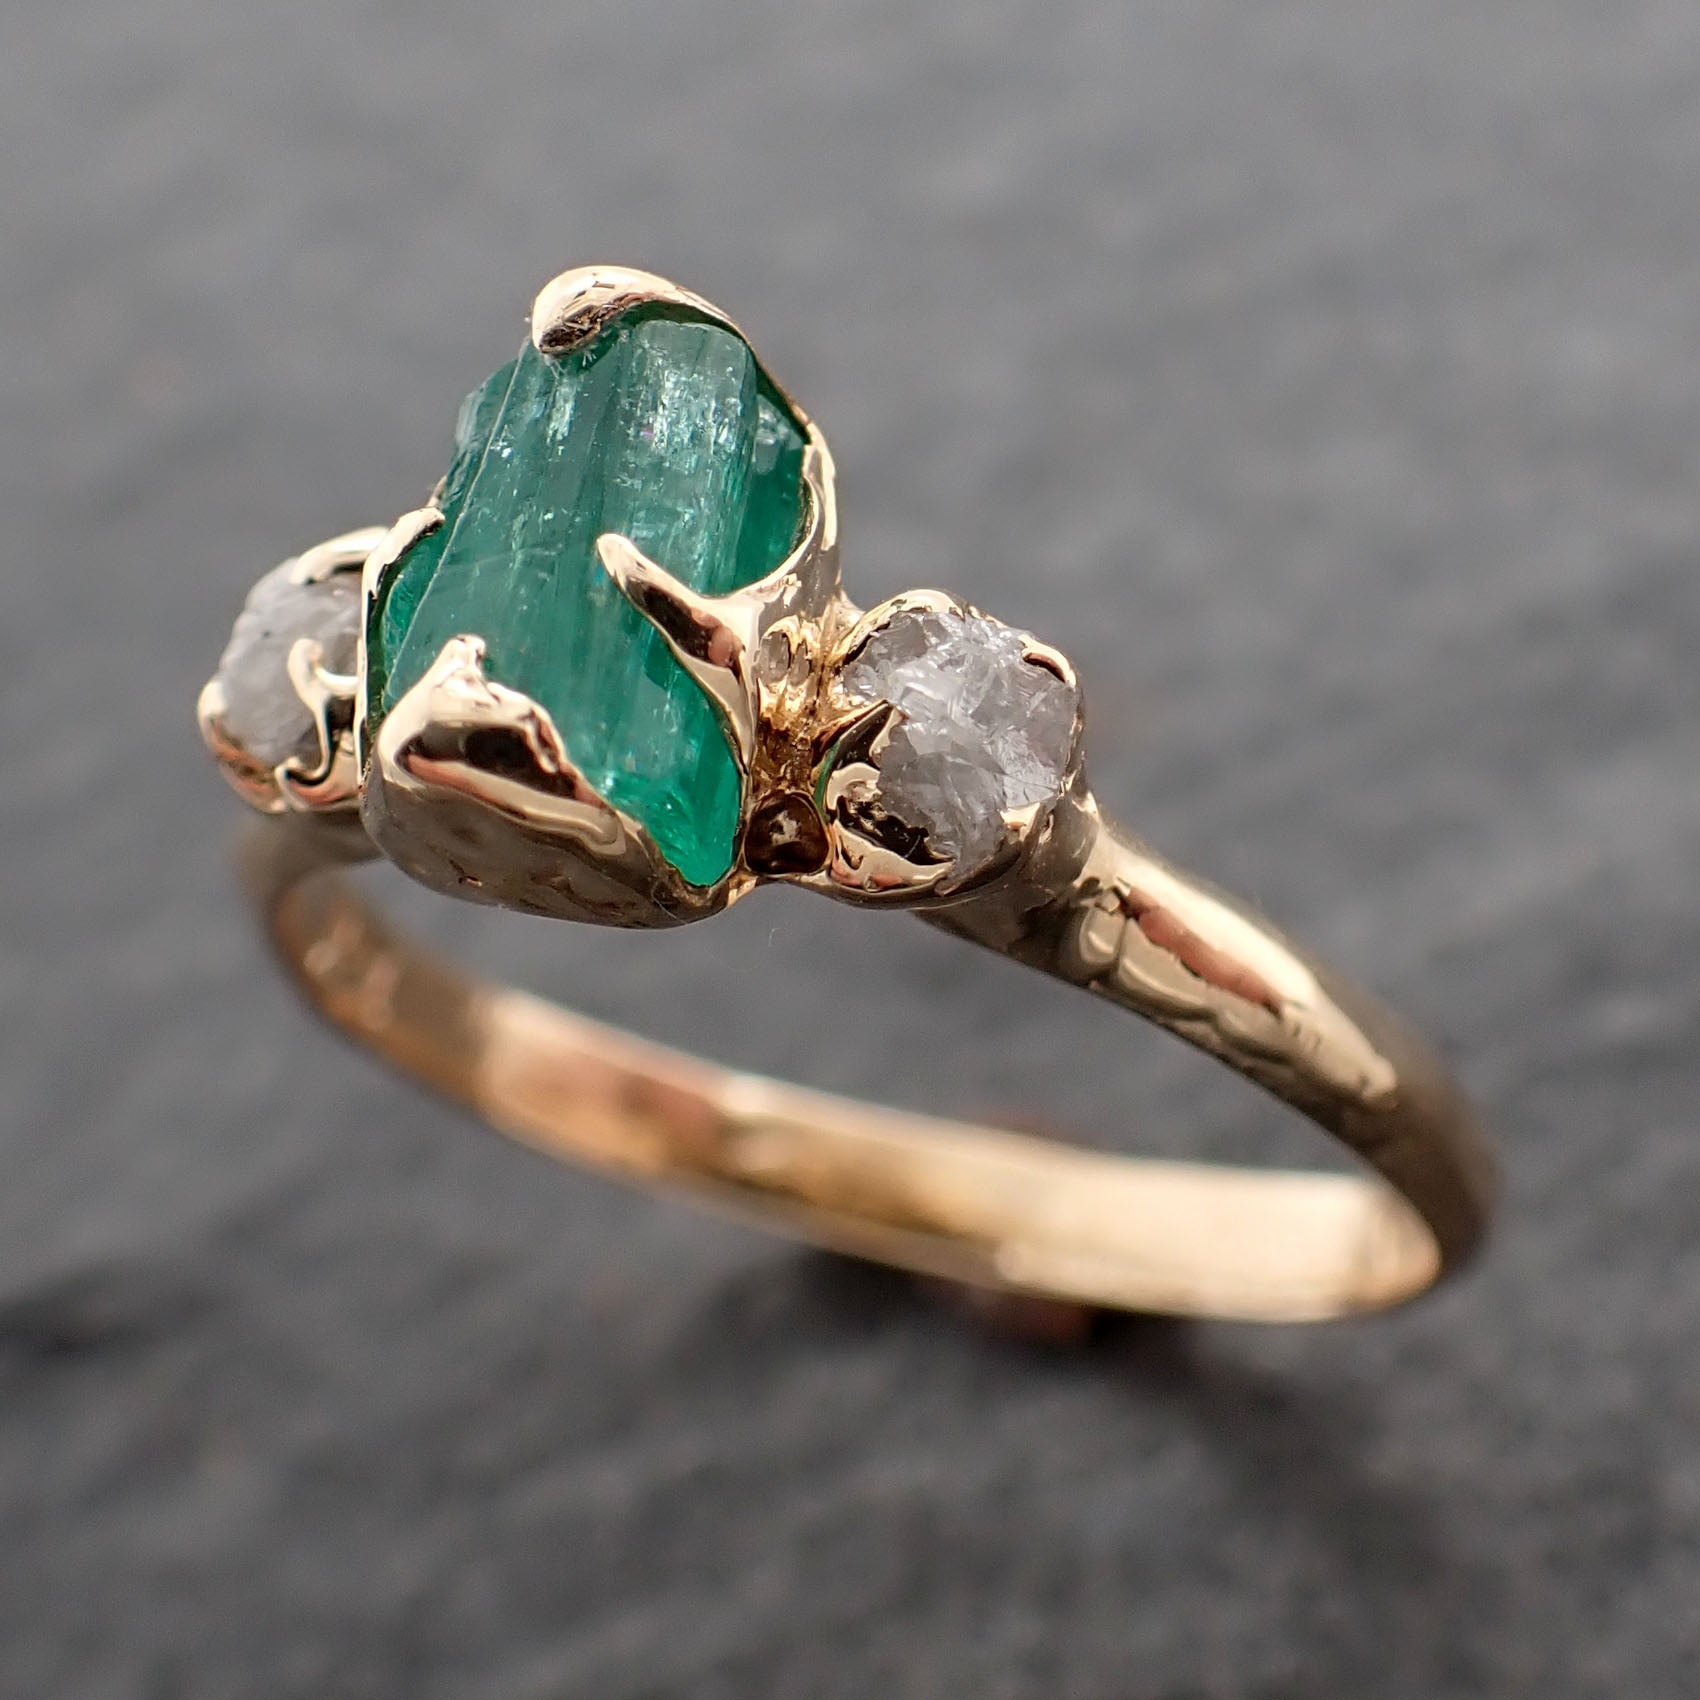 Three raw Stone Diamond and Emerald Engagement Ring 18k Gold Multi stone Wedding Ring Uncut Birthstone Stacking Ring Rough Diamond Ring 2417